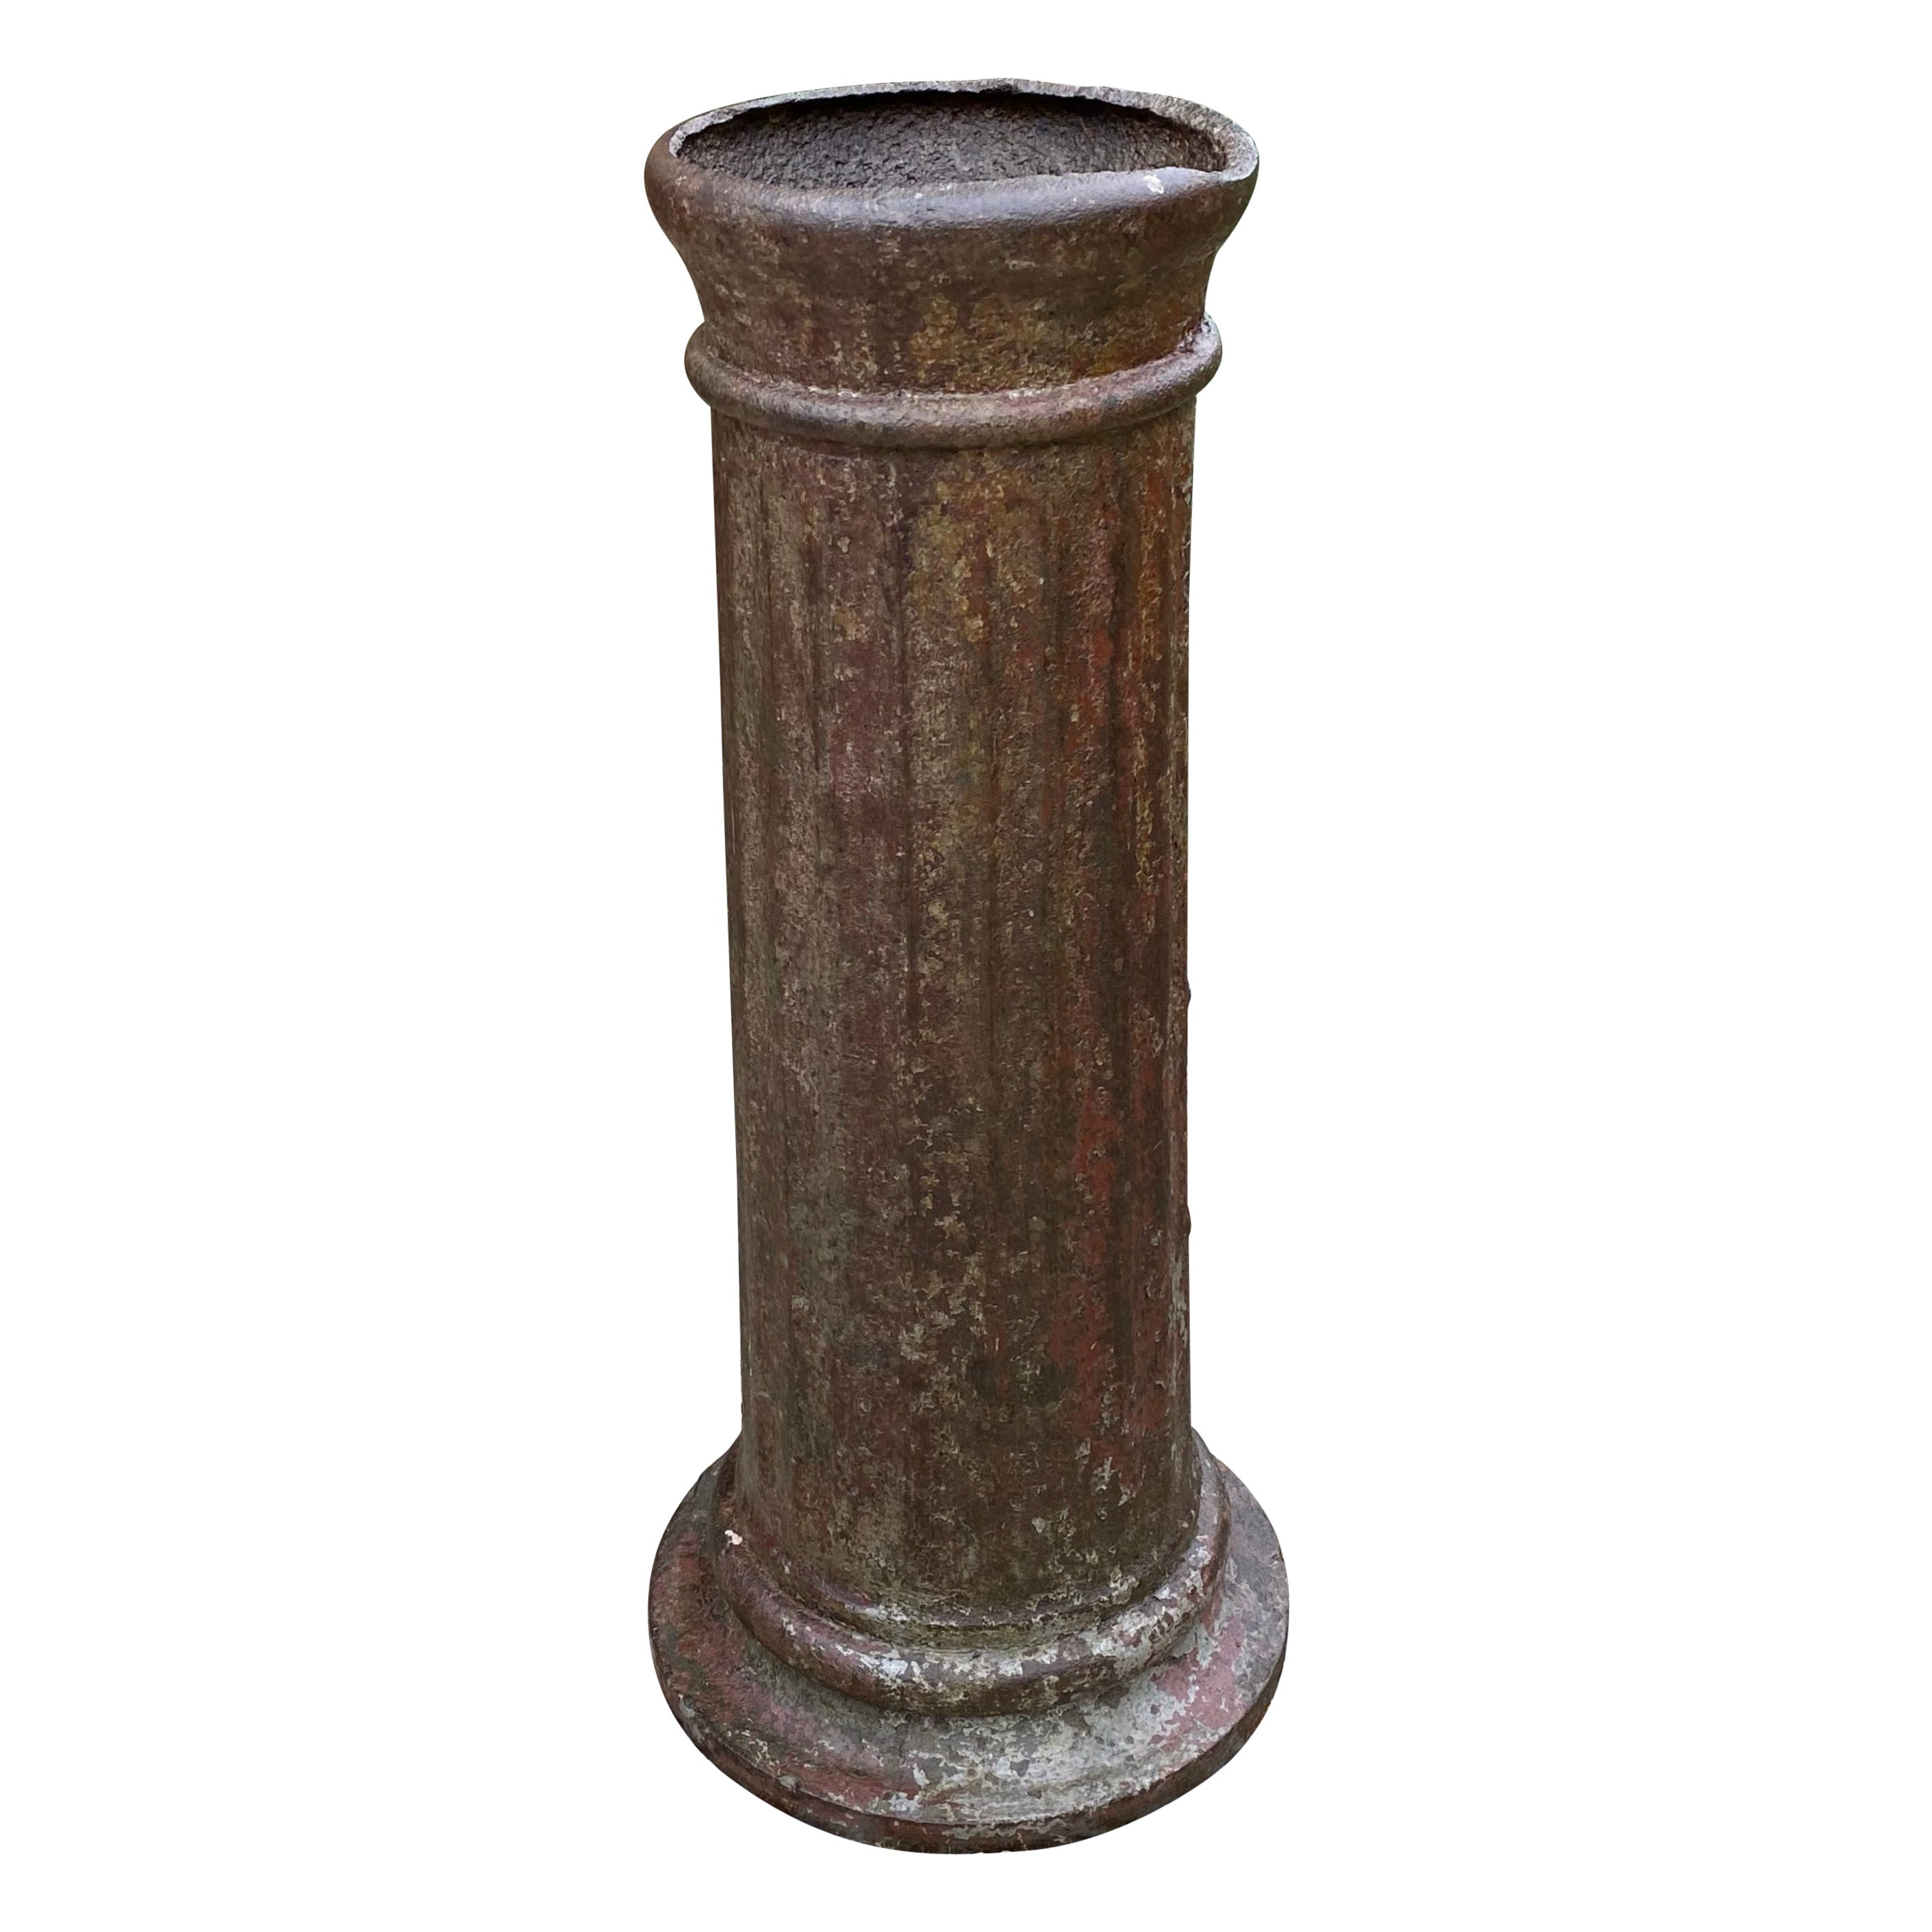 Antique Iron Column Pedestal or Plinth